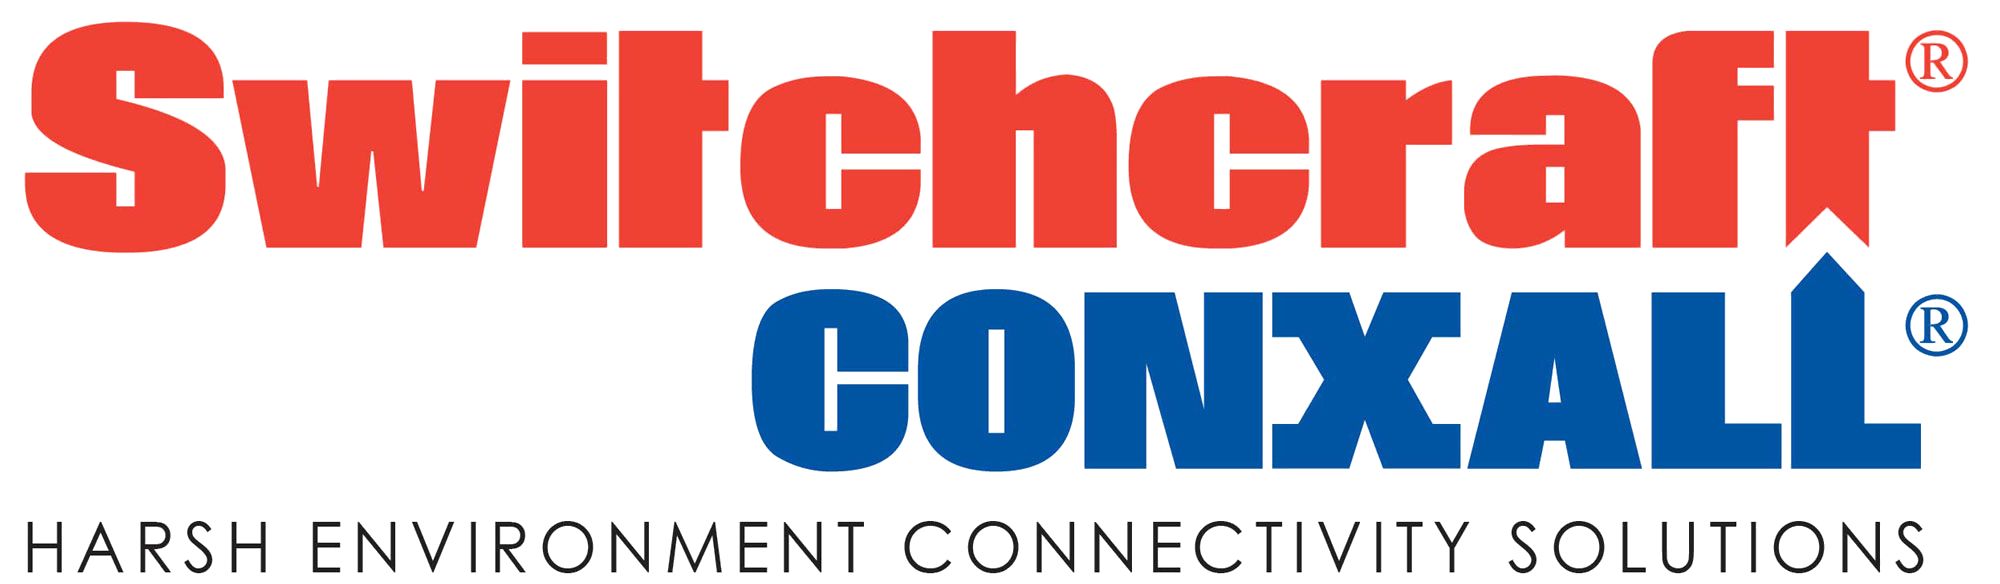 Logo_Switchcraft